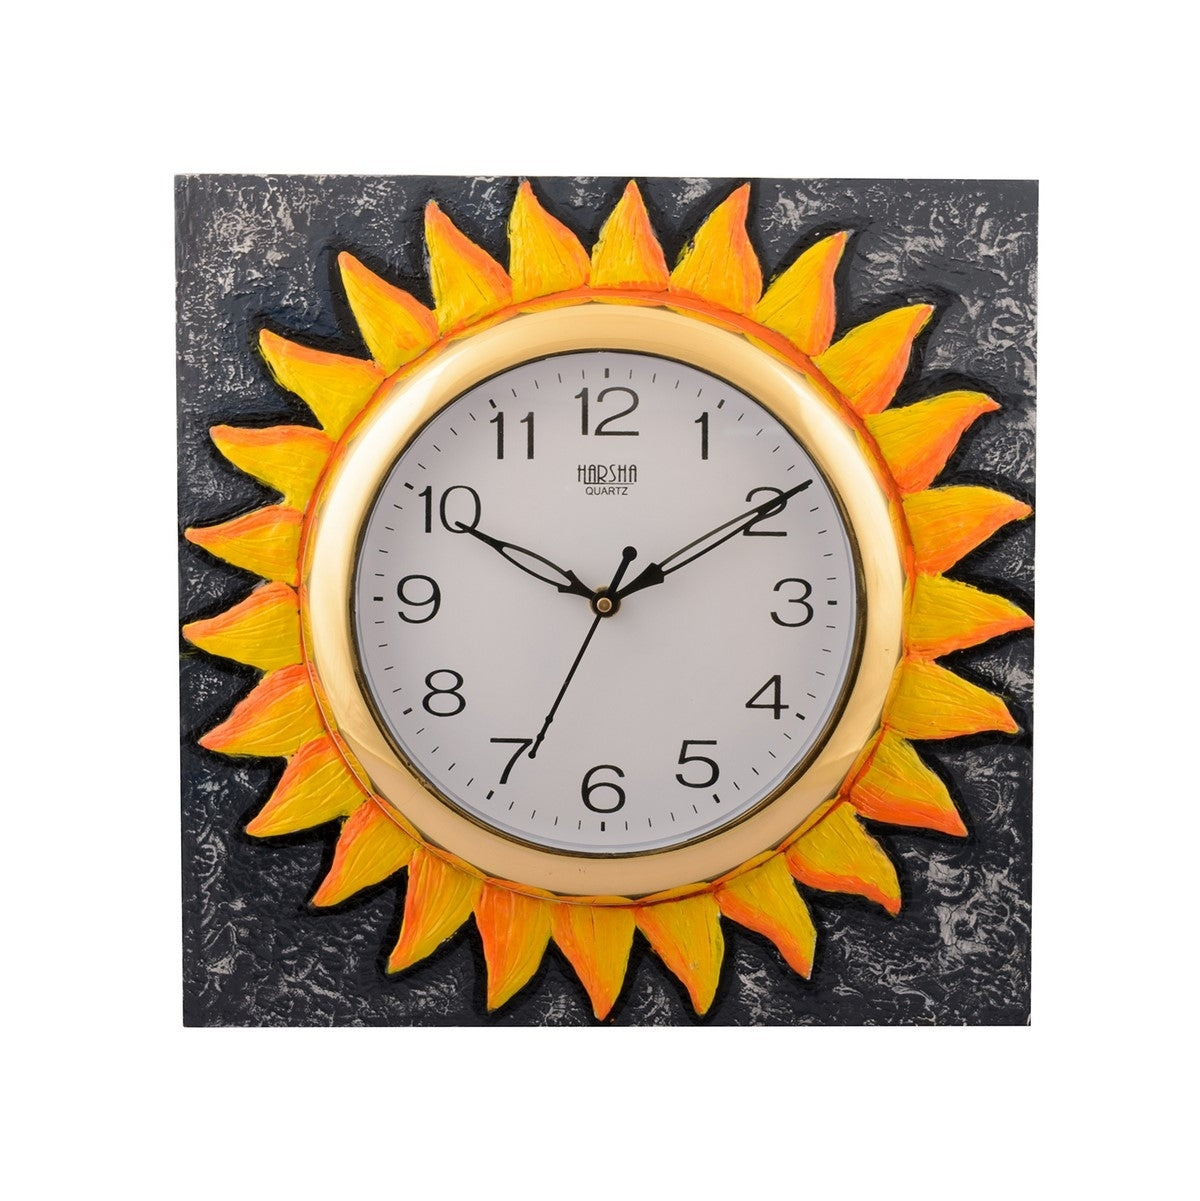 Artistic Handicrafted Square Shape Sun Design Wooden Wall Clock